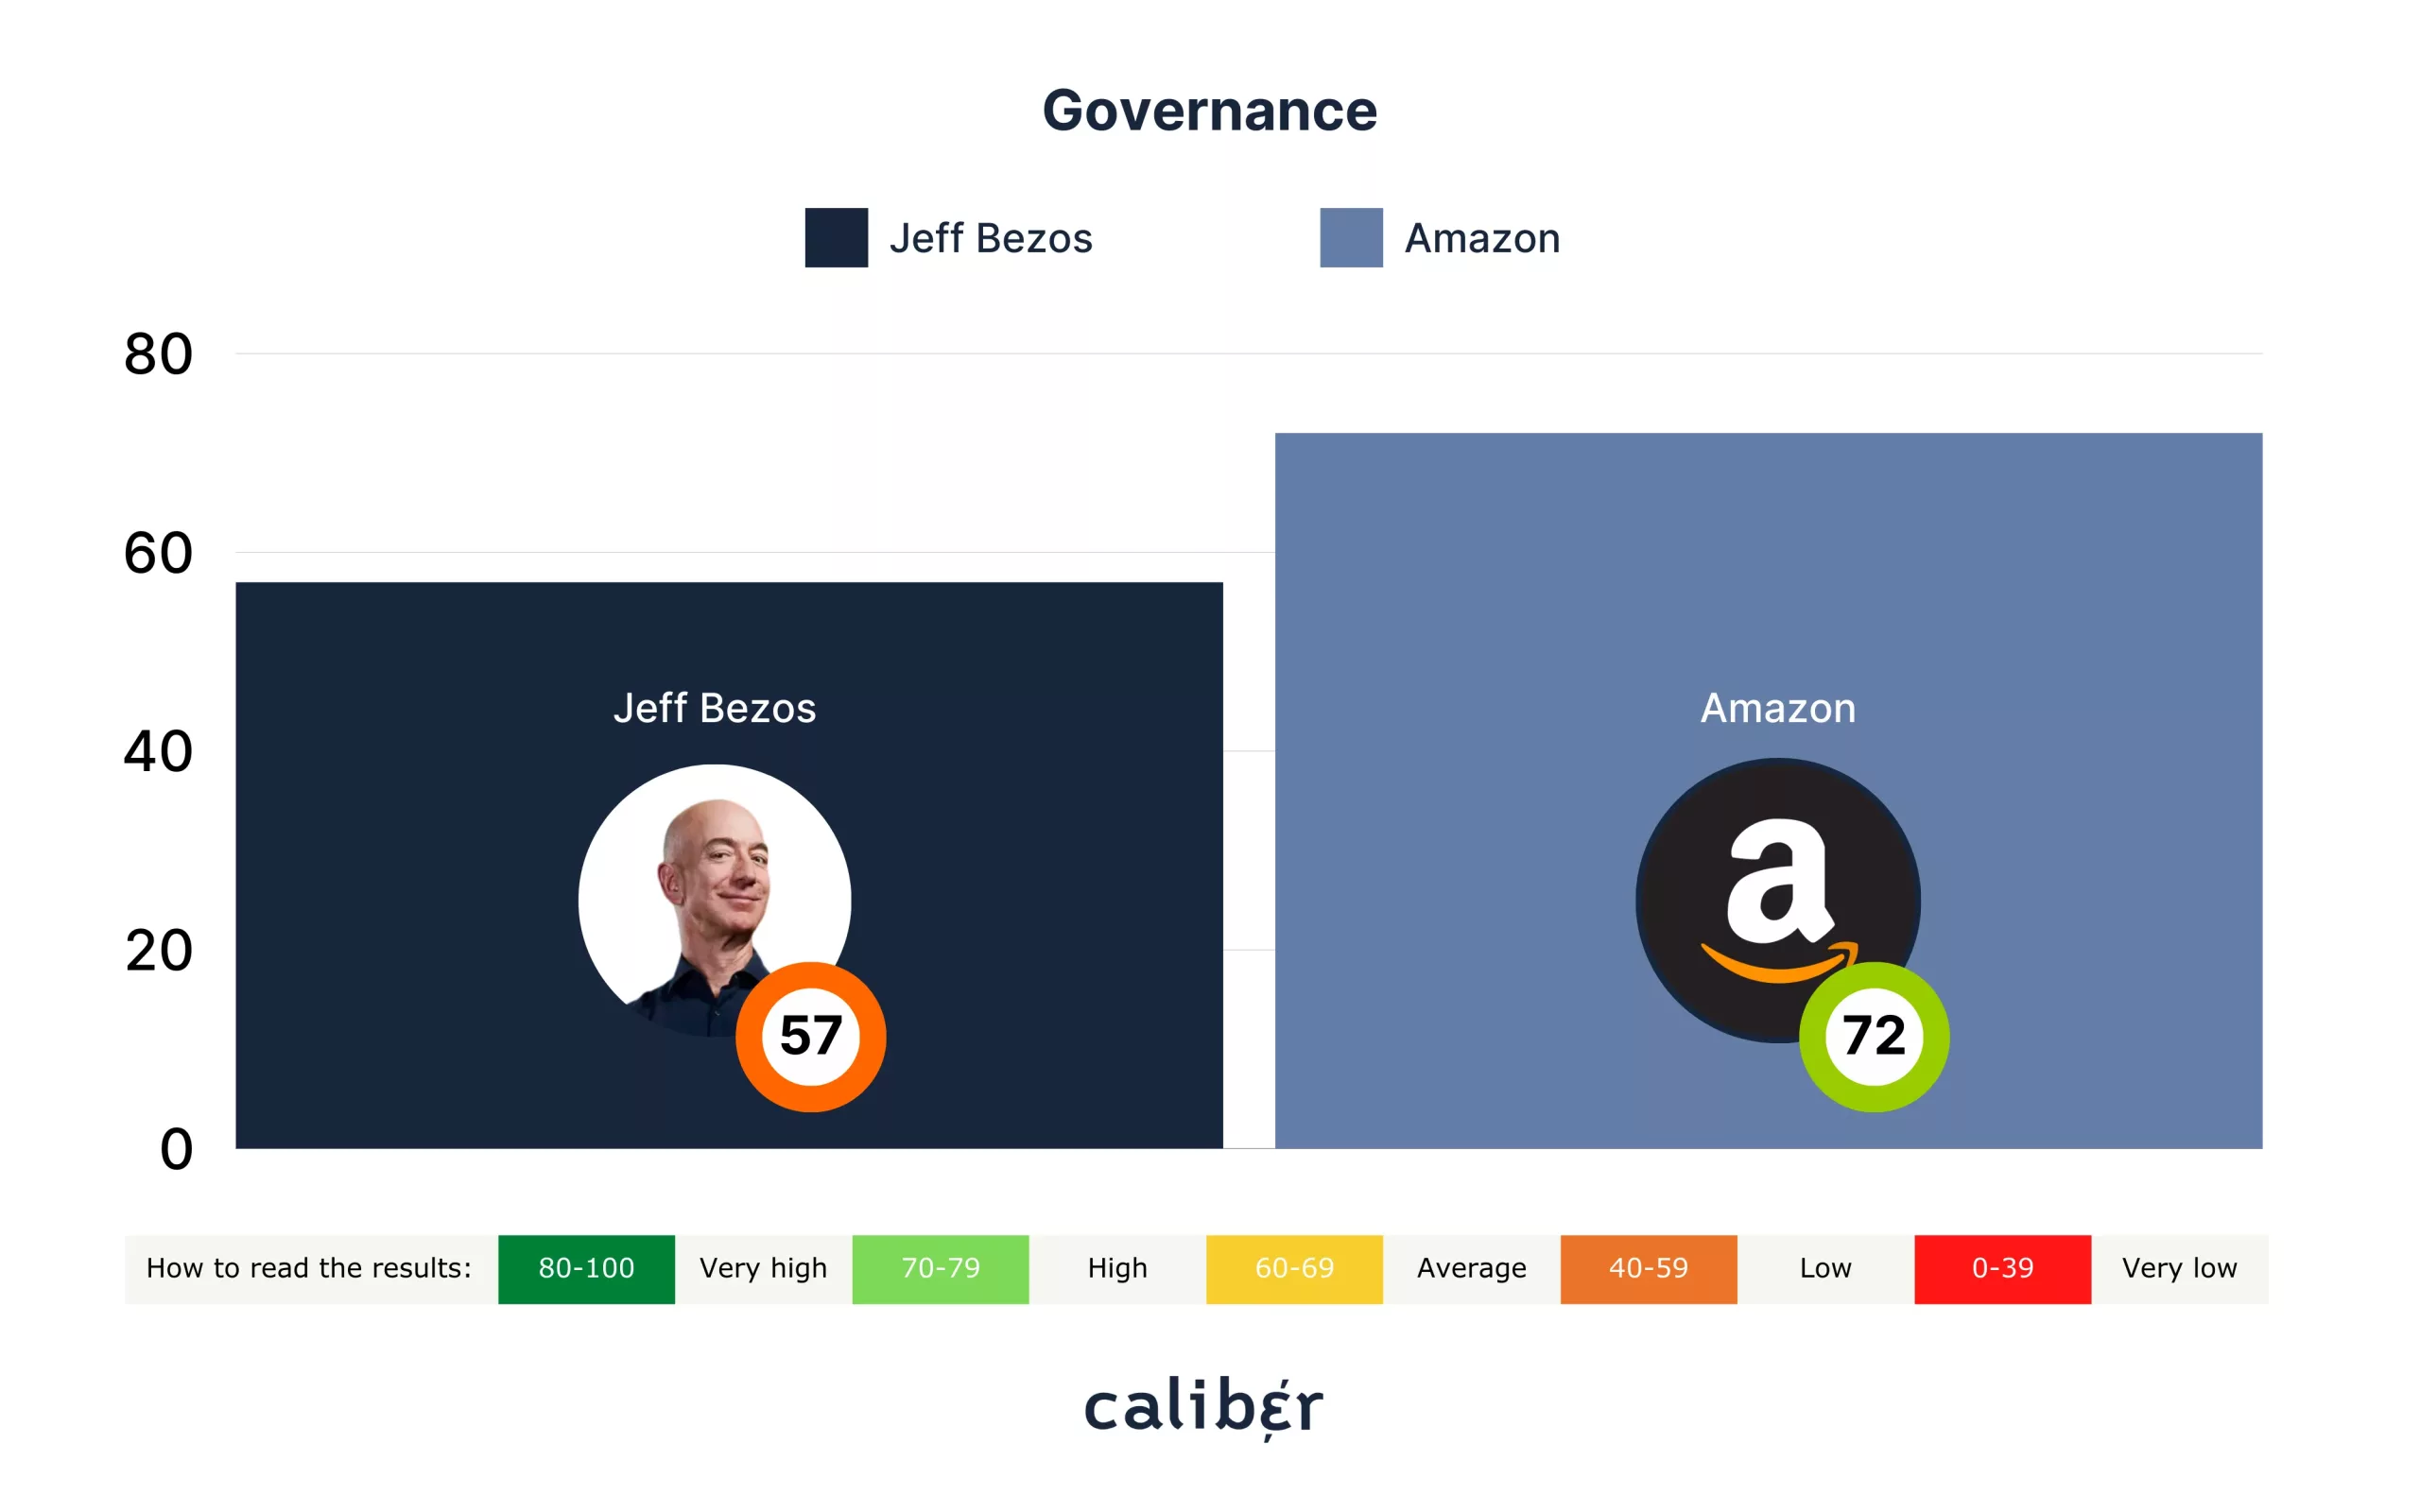 Jeff Bezos Governance Score